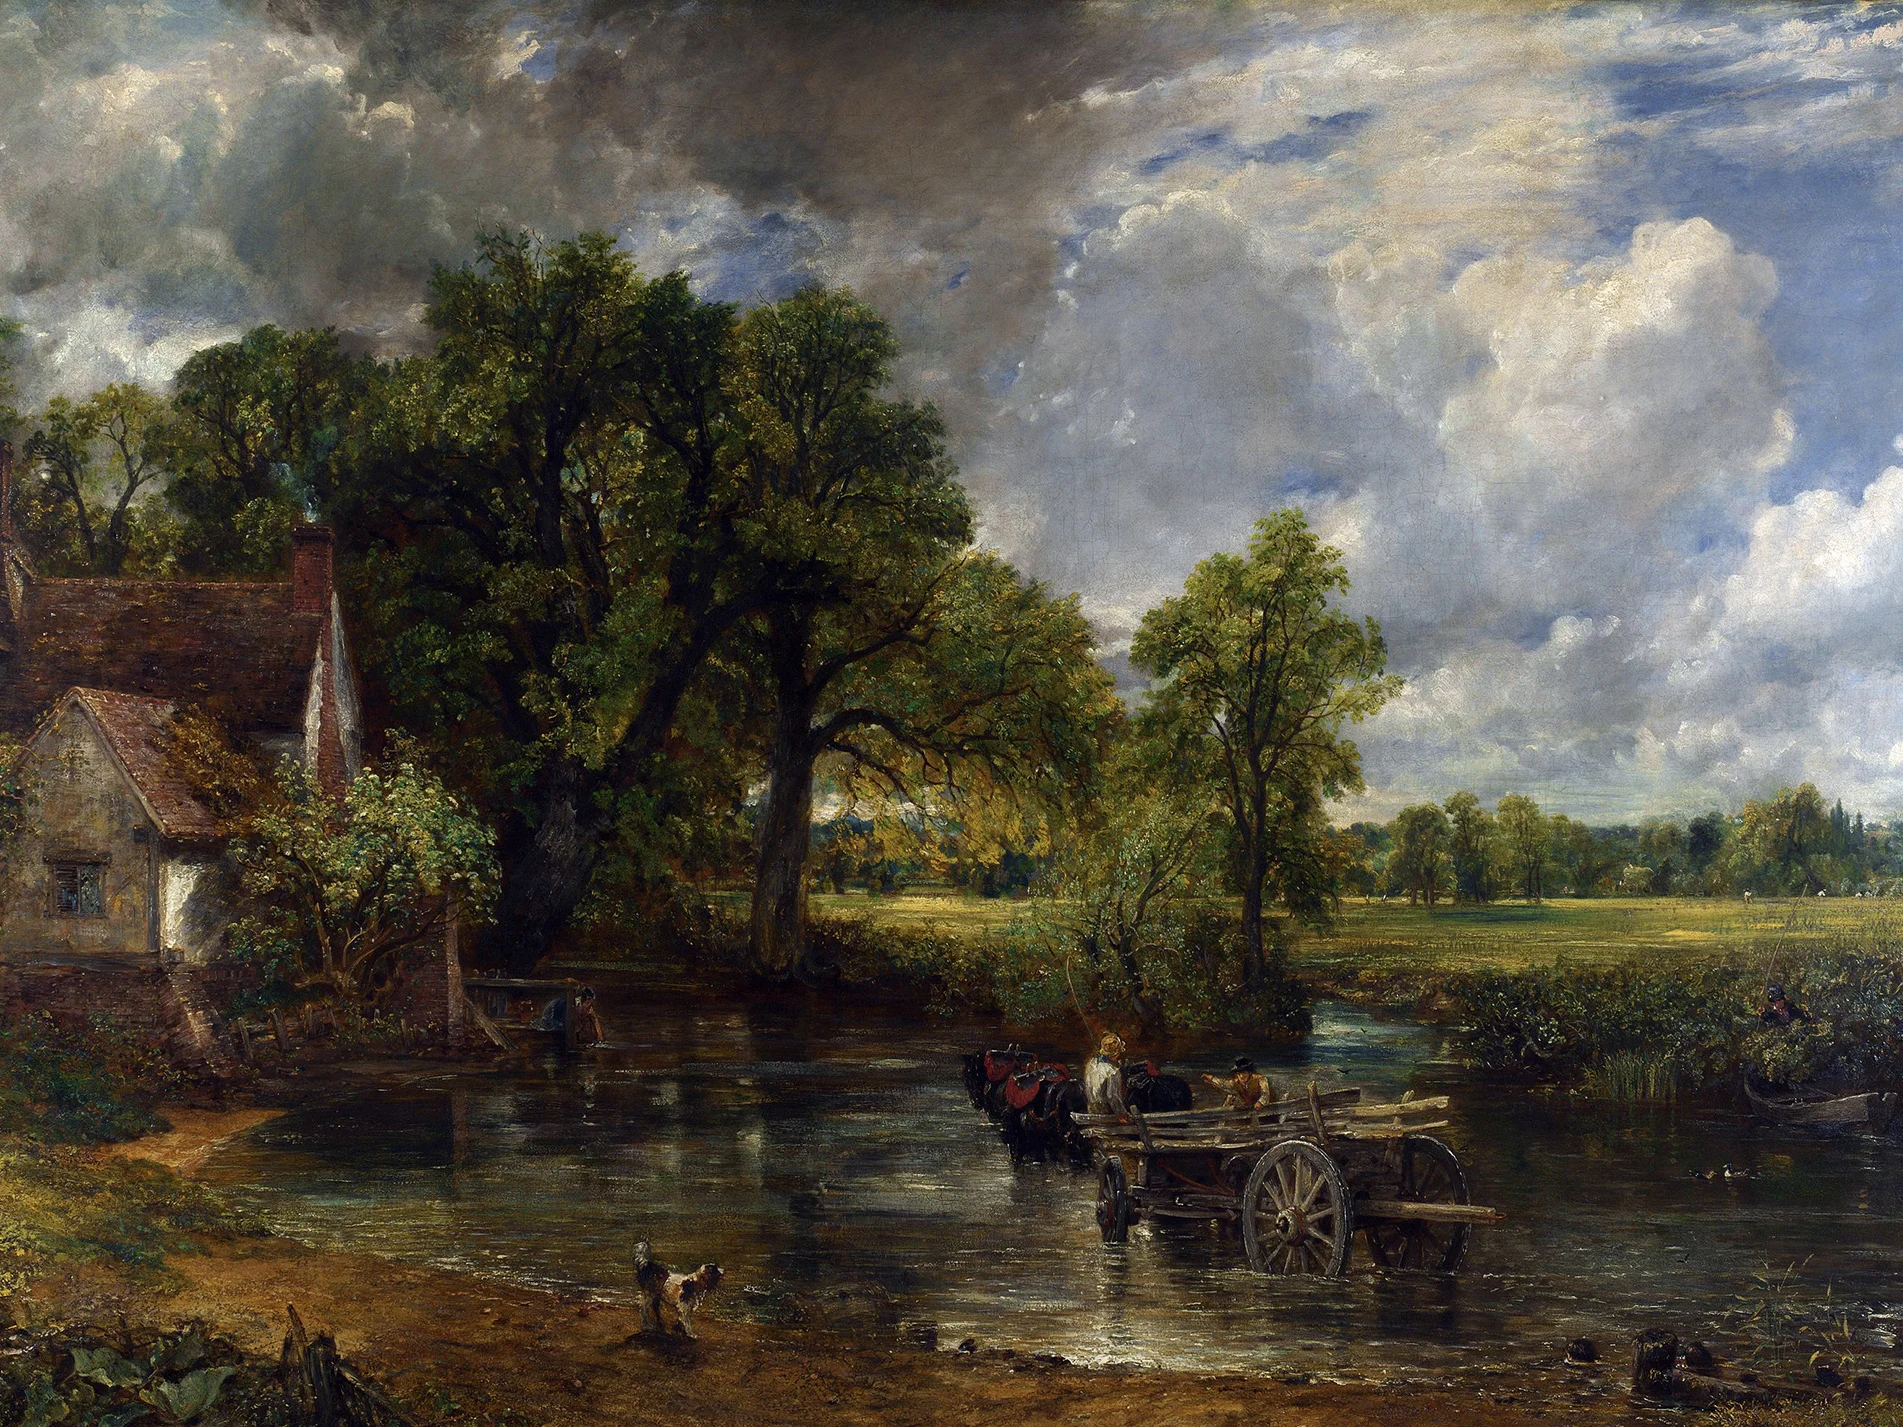 The Hay Wain by John Constable (1821)